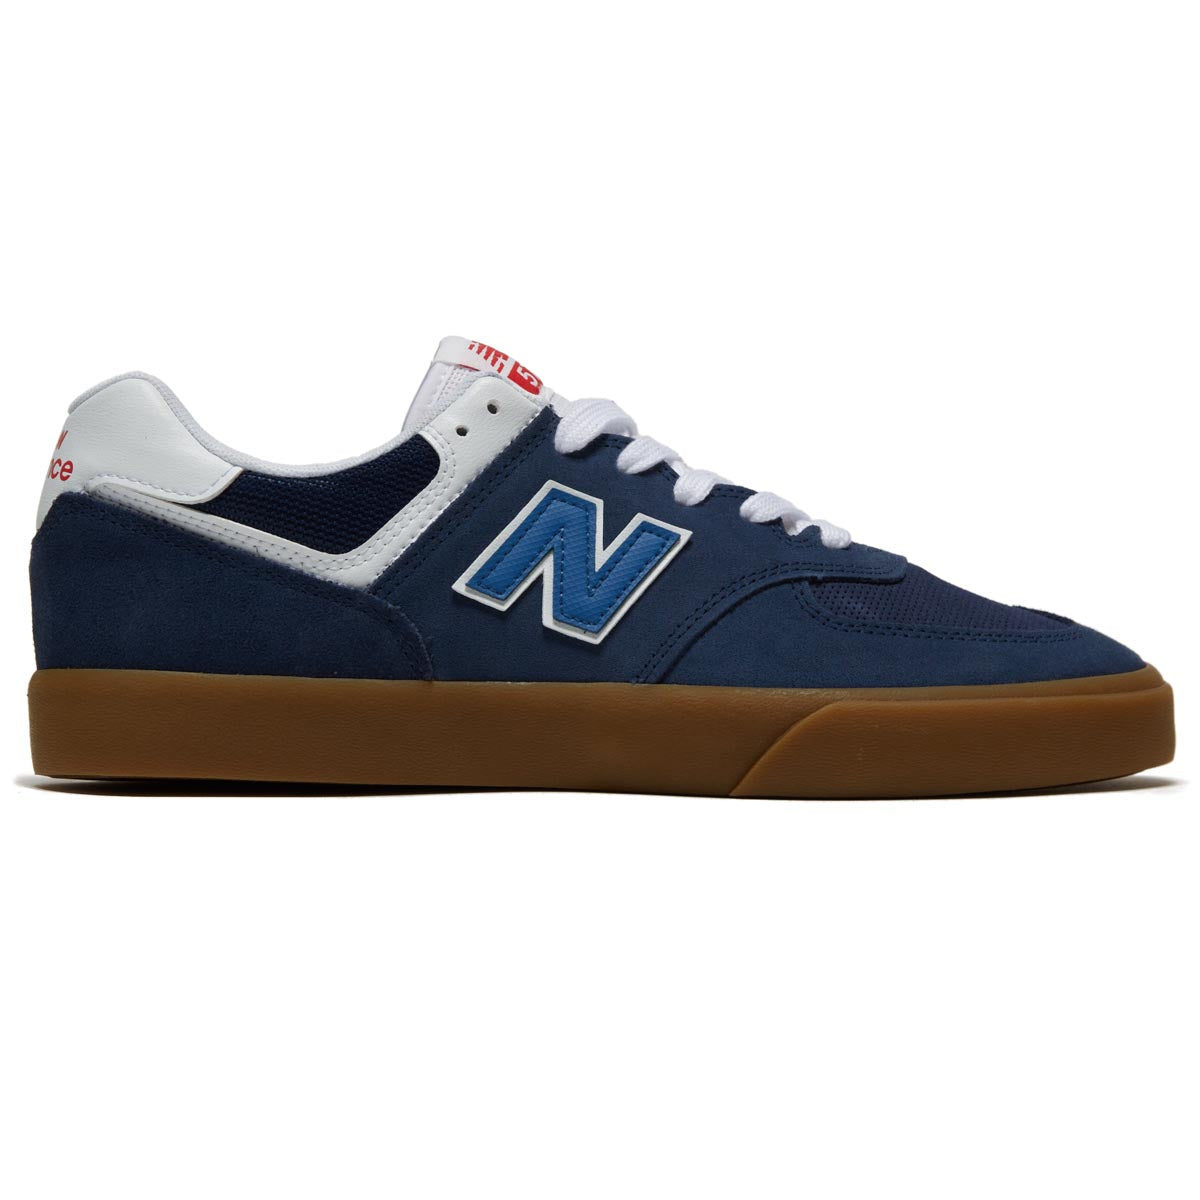 New Balance 574 Vulc Shoes - Navy/Gum image 1